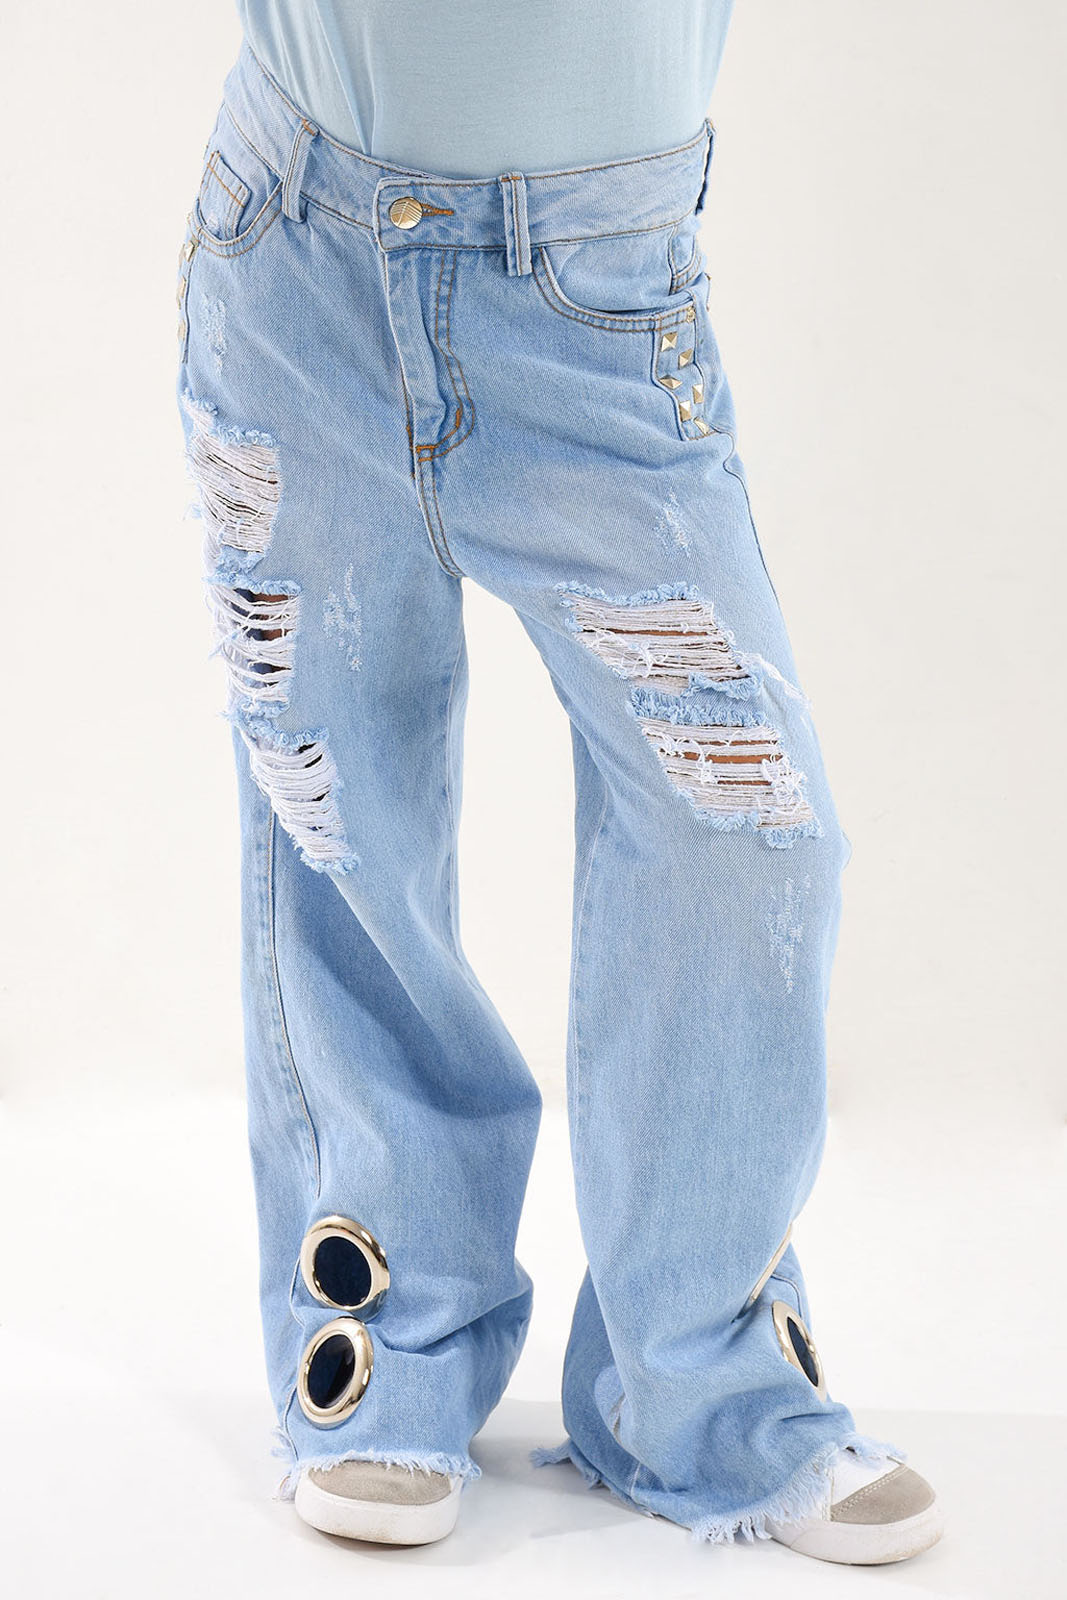 Galaxy Commerce - Jean para Niña Indigo marca Chica Chic P20302